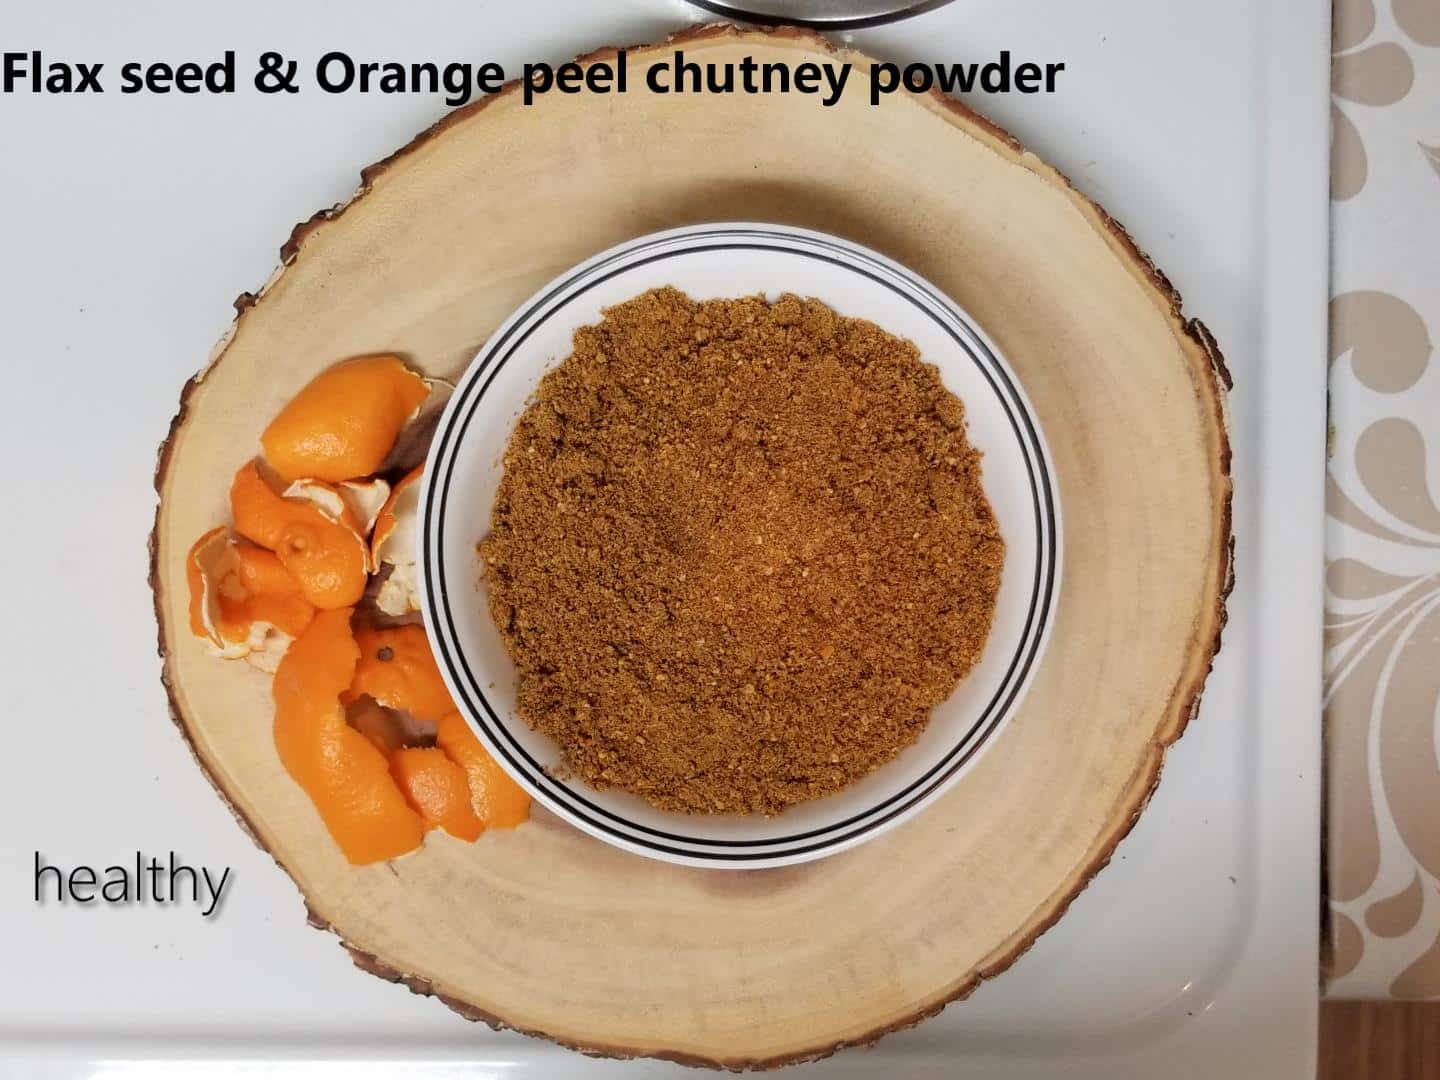 Flax seed chutney powder | Flaxseed chutney powder | Health benefits of flax seed